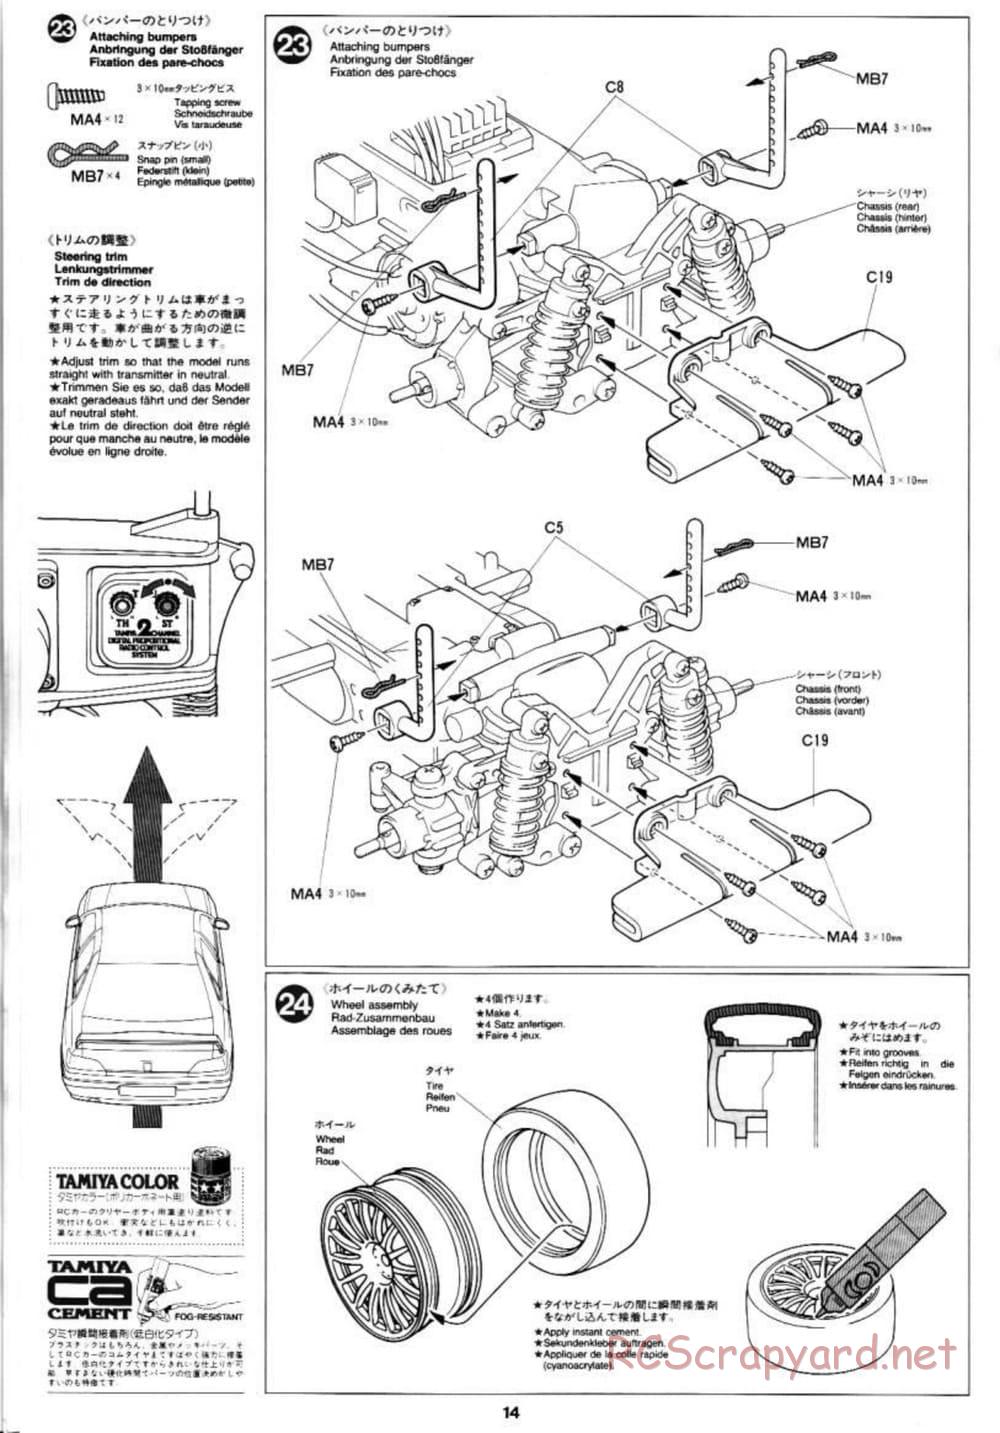 Tamiya - Peugeot 406 ST - TL-01 Chassis - Manual - Page 14